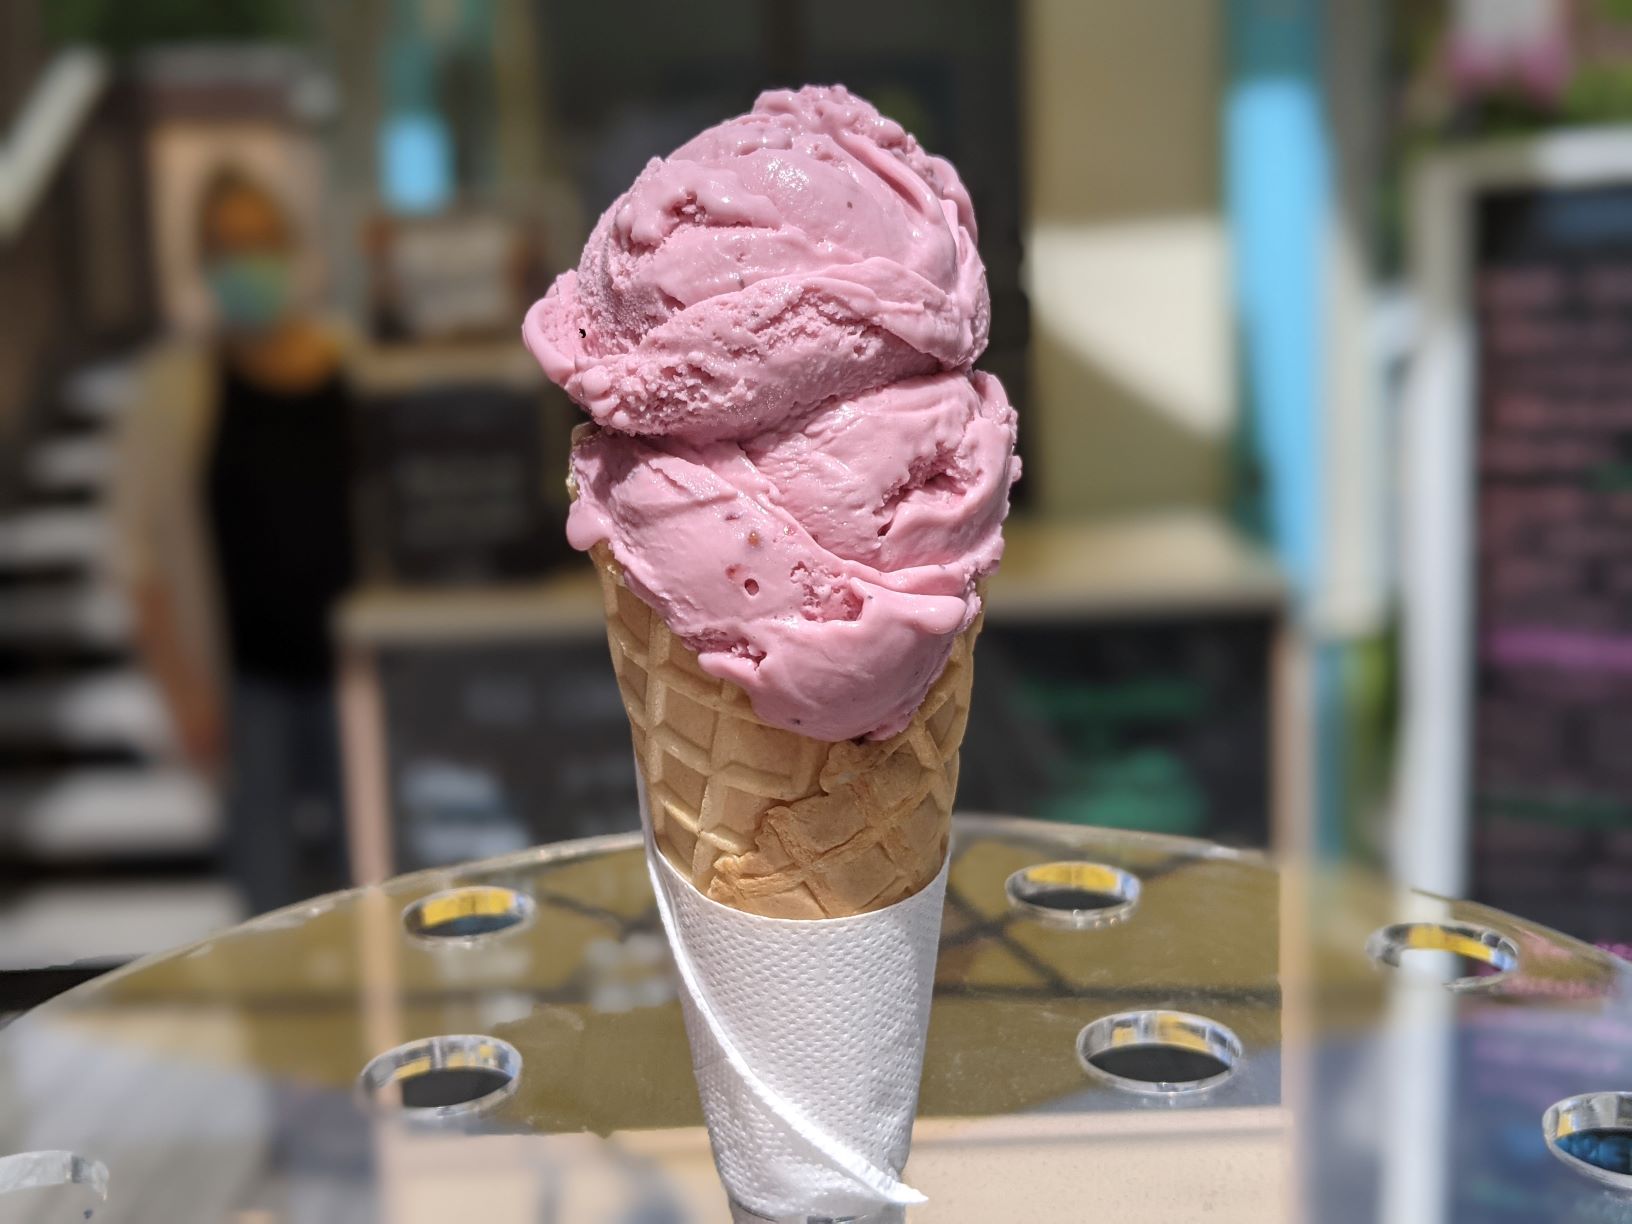 scoop of pink ice cream